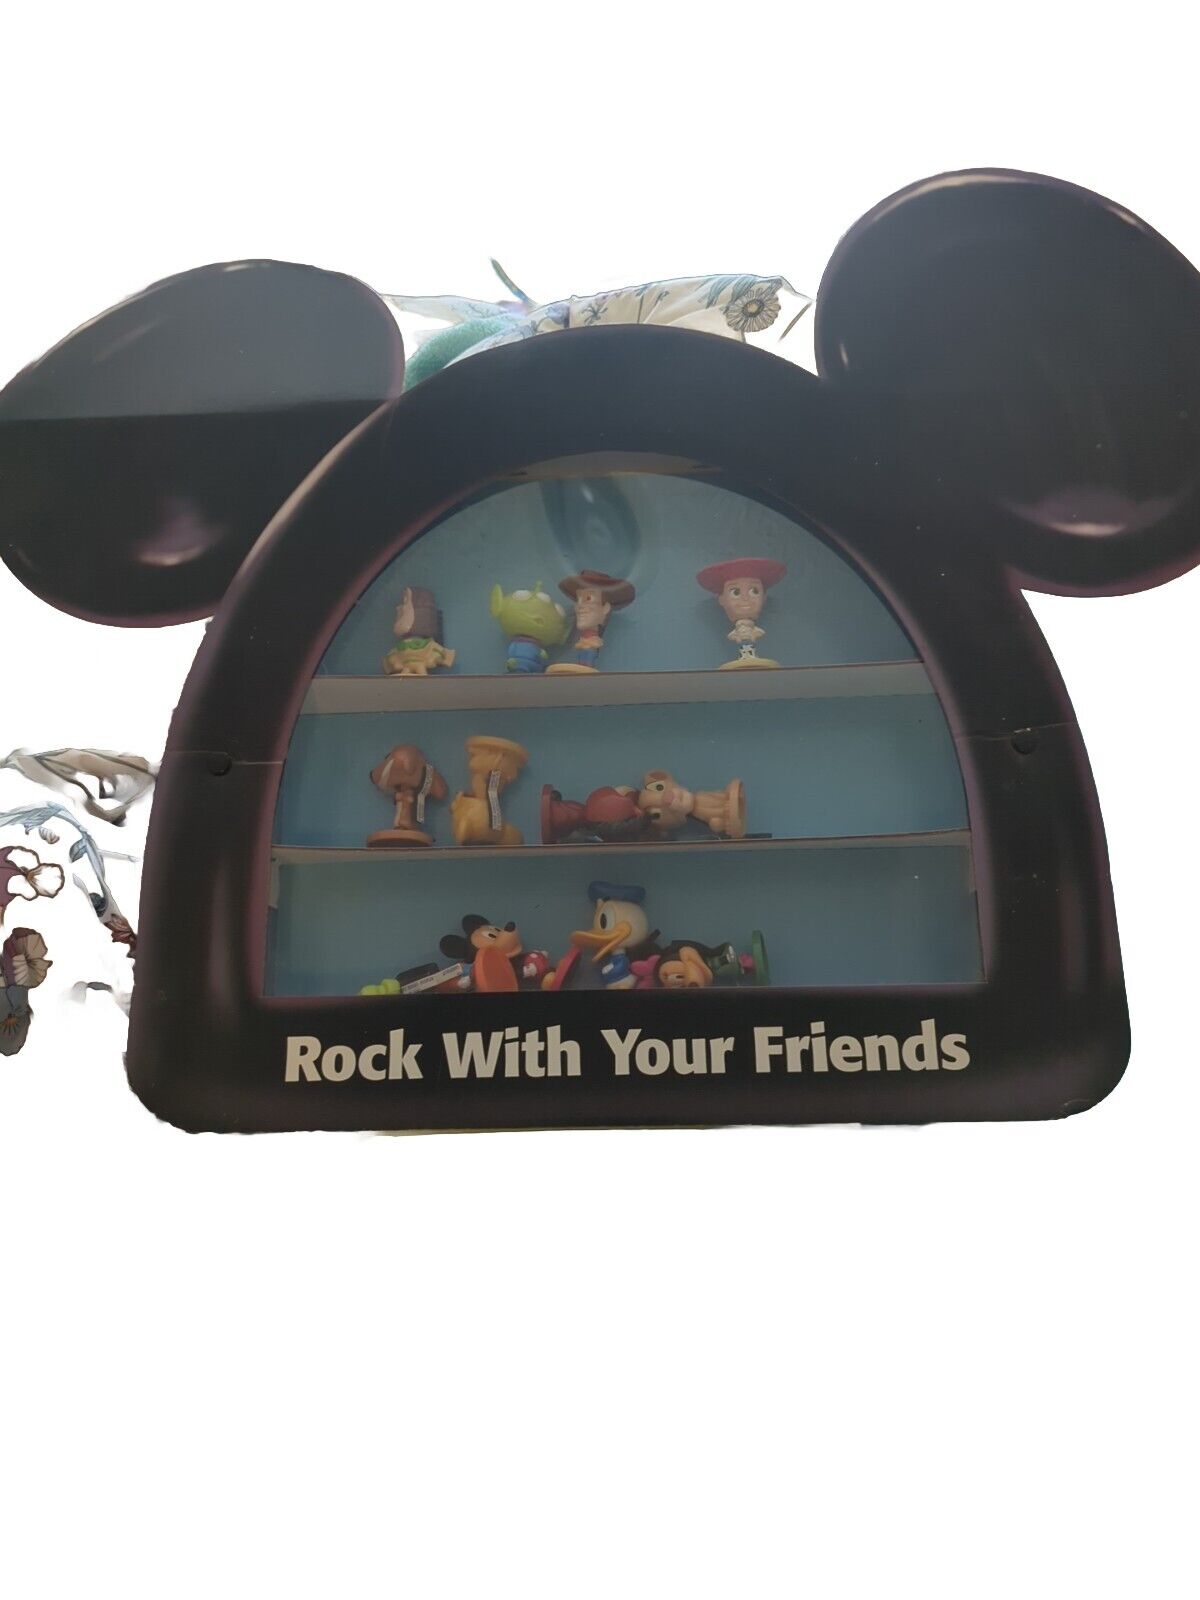 Mini Bobble Heads Kellogg’s/Keeblers  Store Display Walt Disney Toy Story 